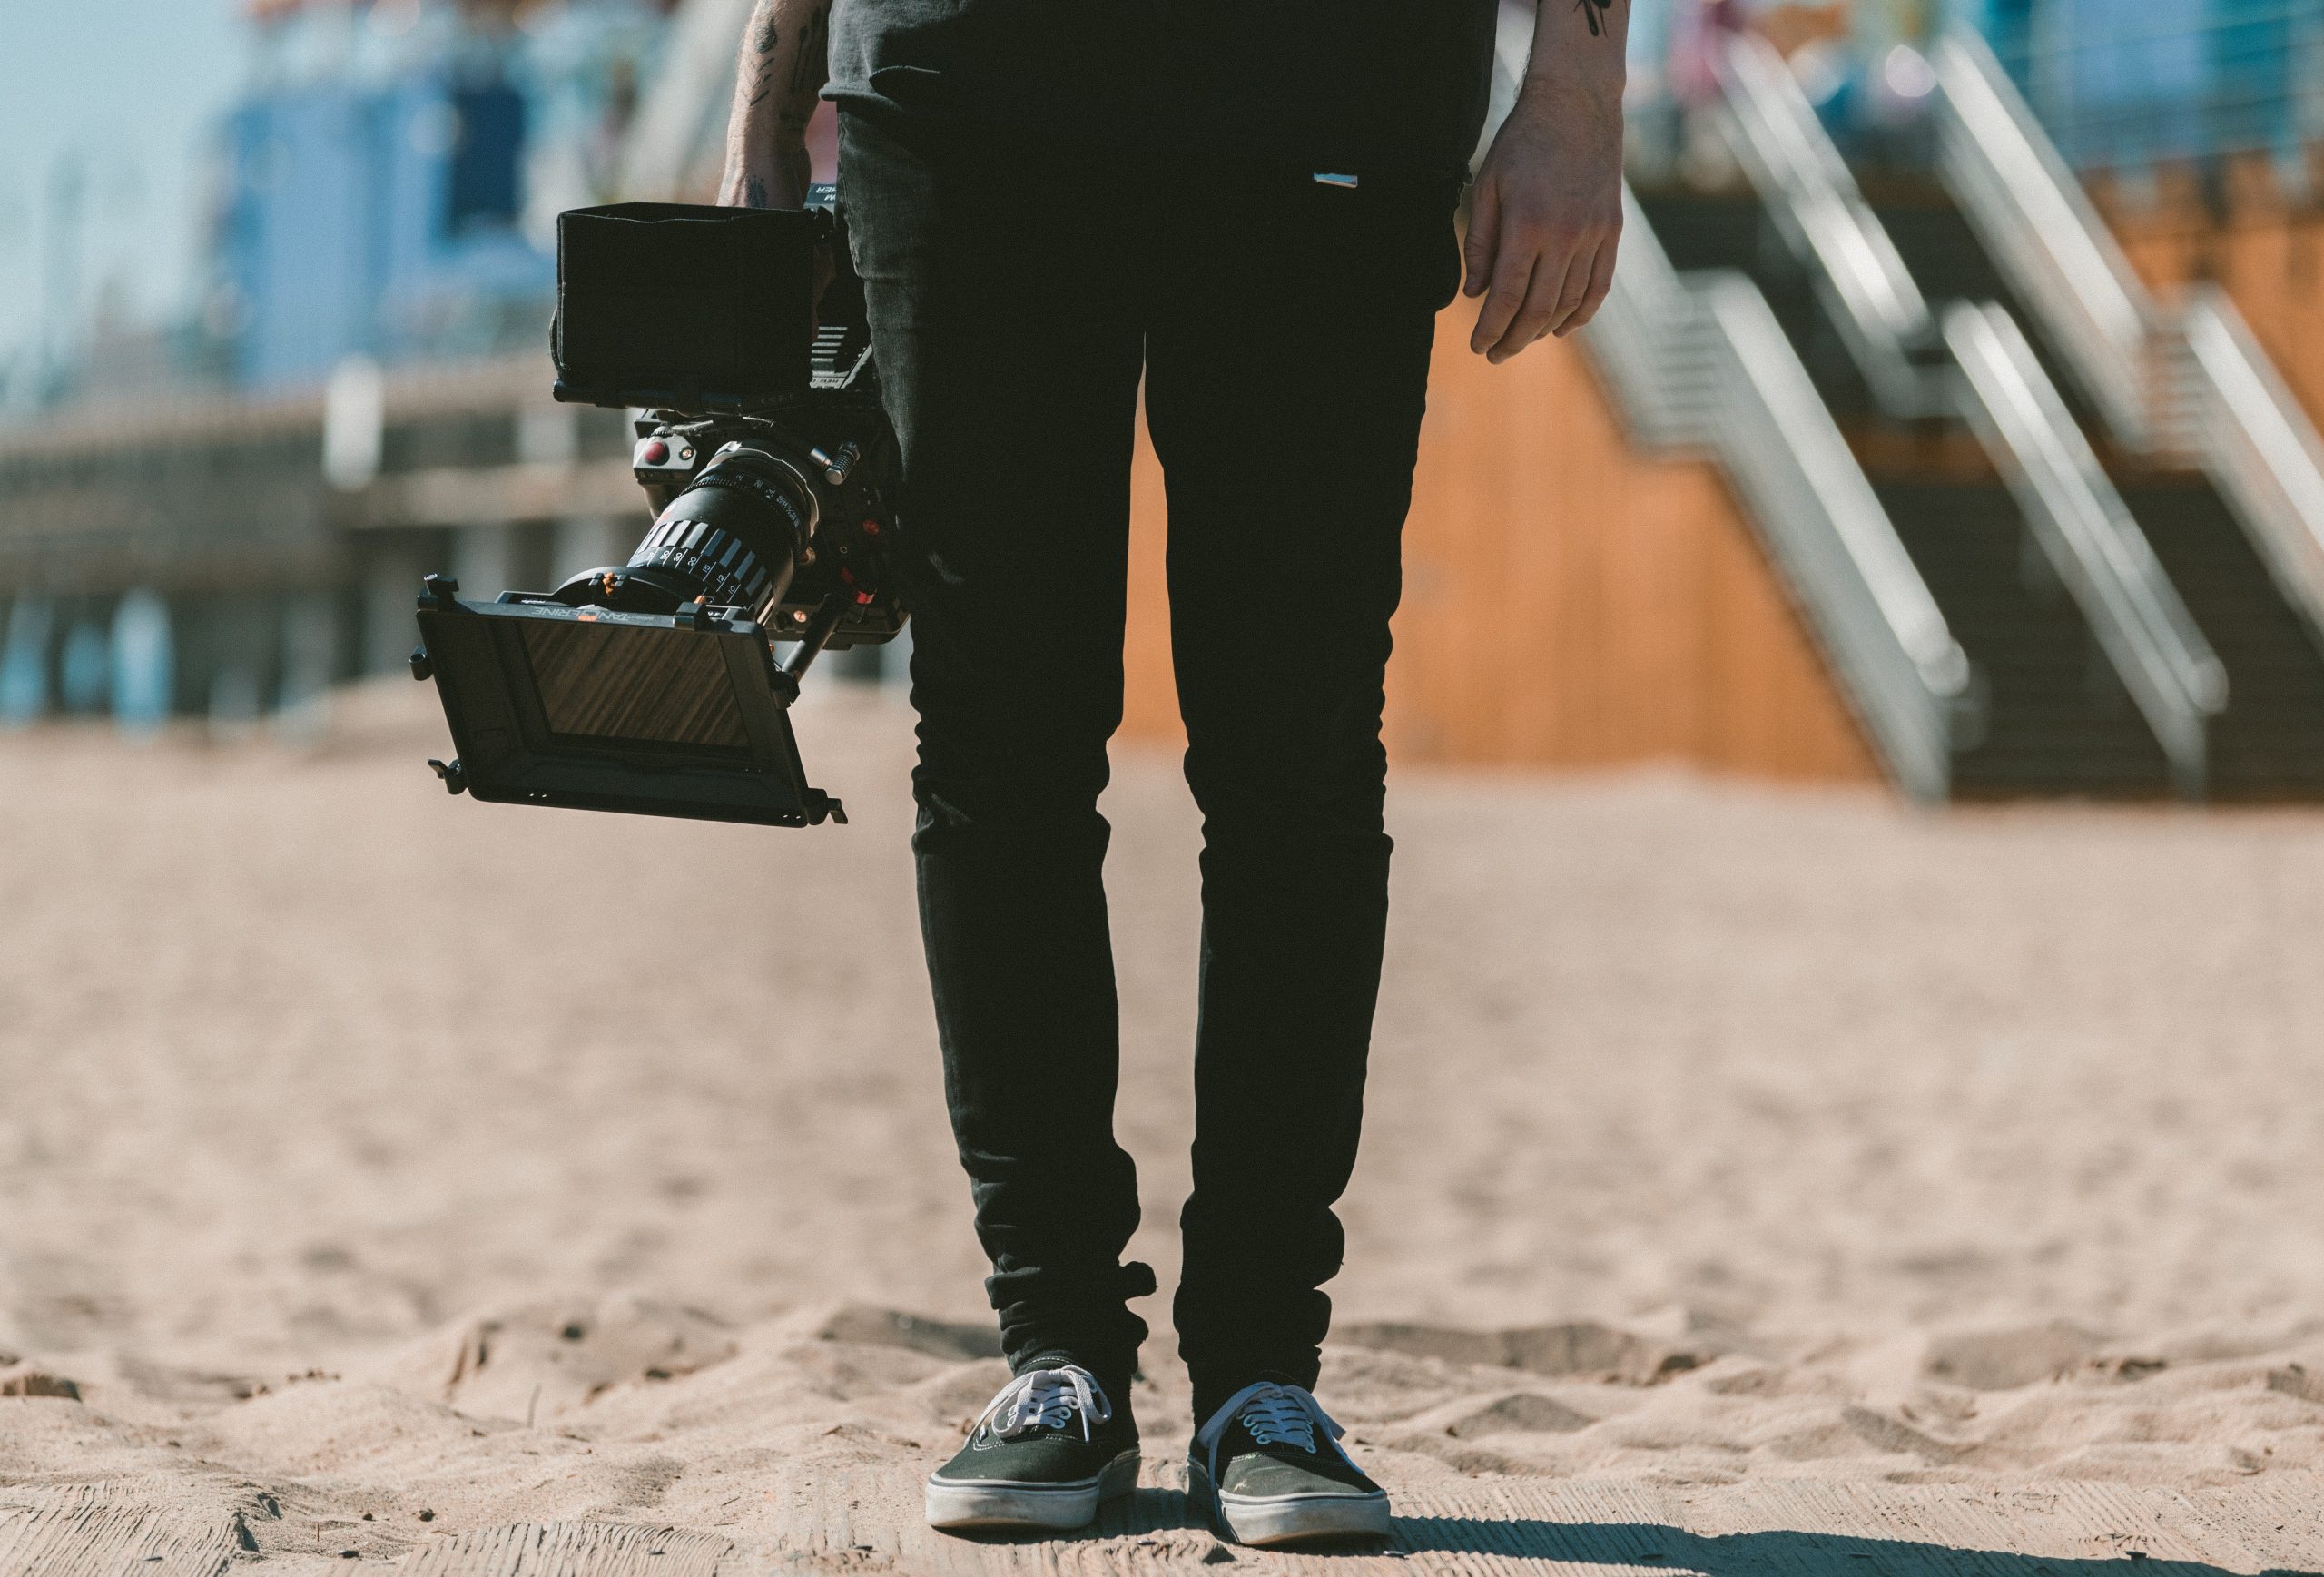 Cameraman holding a big camera, ready to shoot awesome digital video shorts.